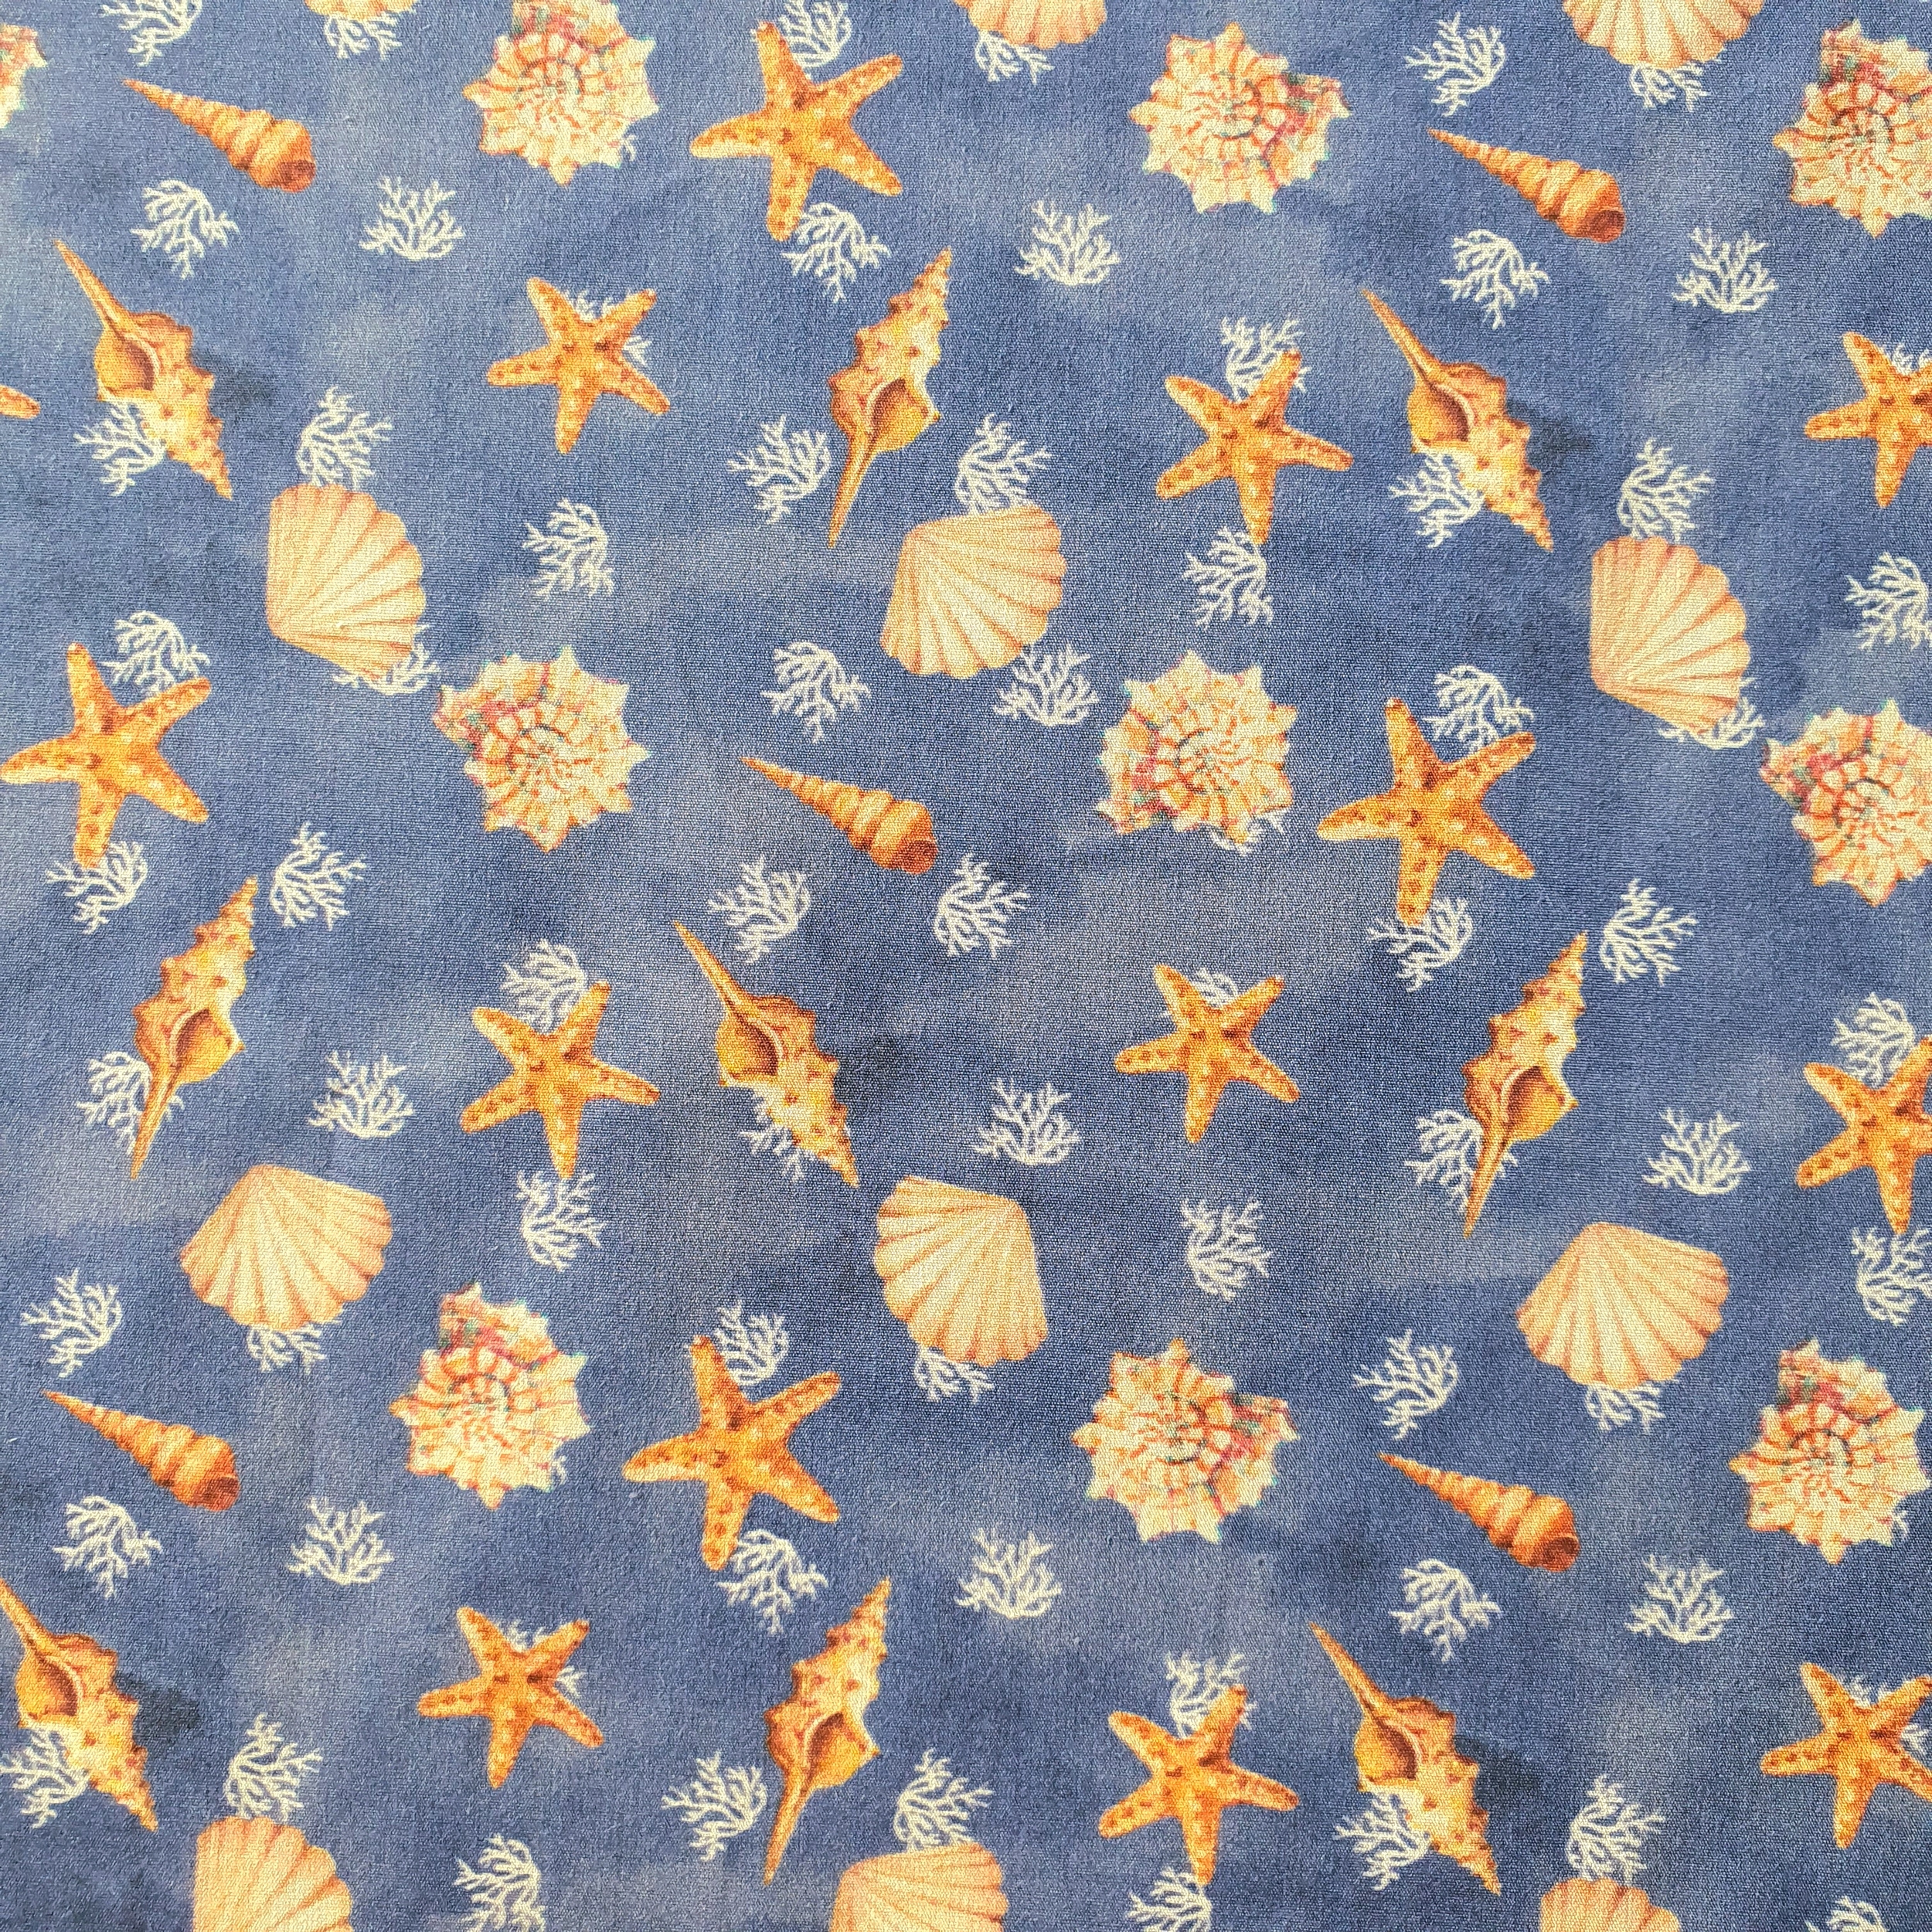 tissu coton bio bleu avec coquillage et étoile de mer (1)